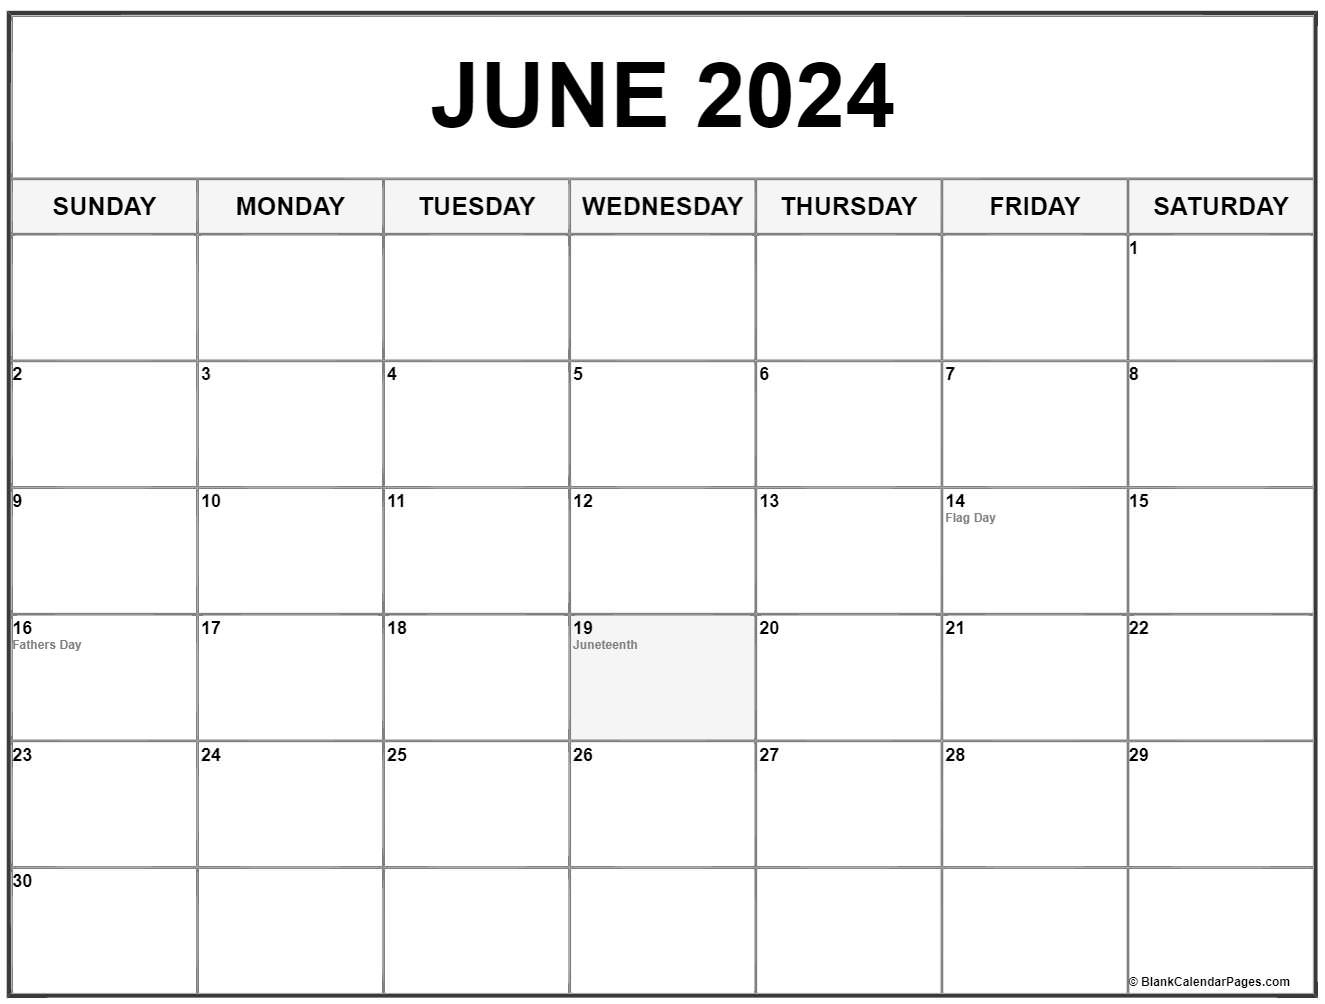 June 2024 With Holidays Calendar inside Holiday Calendar June 2024